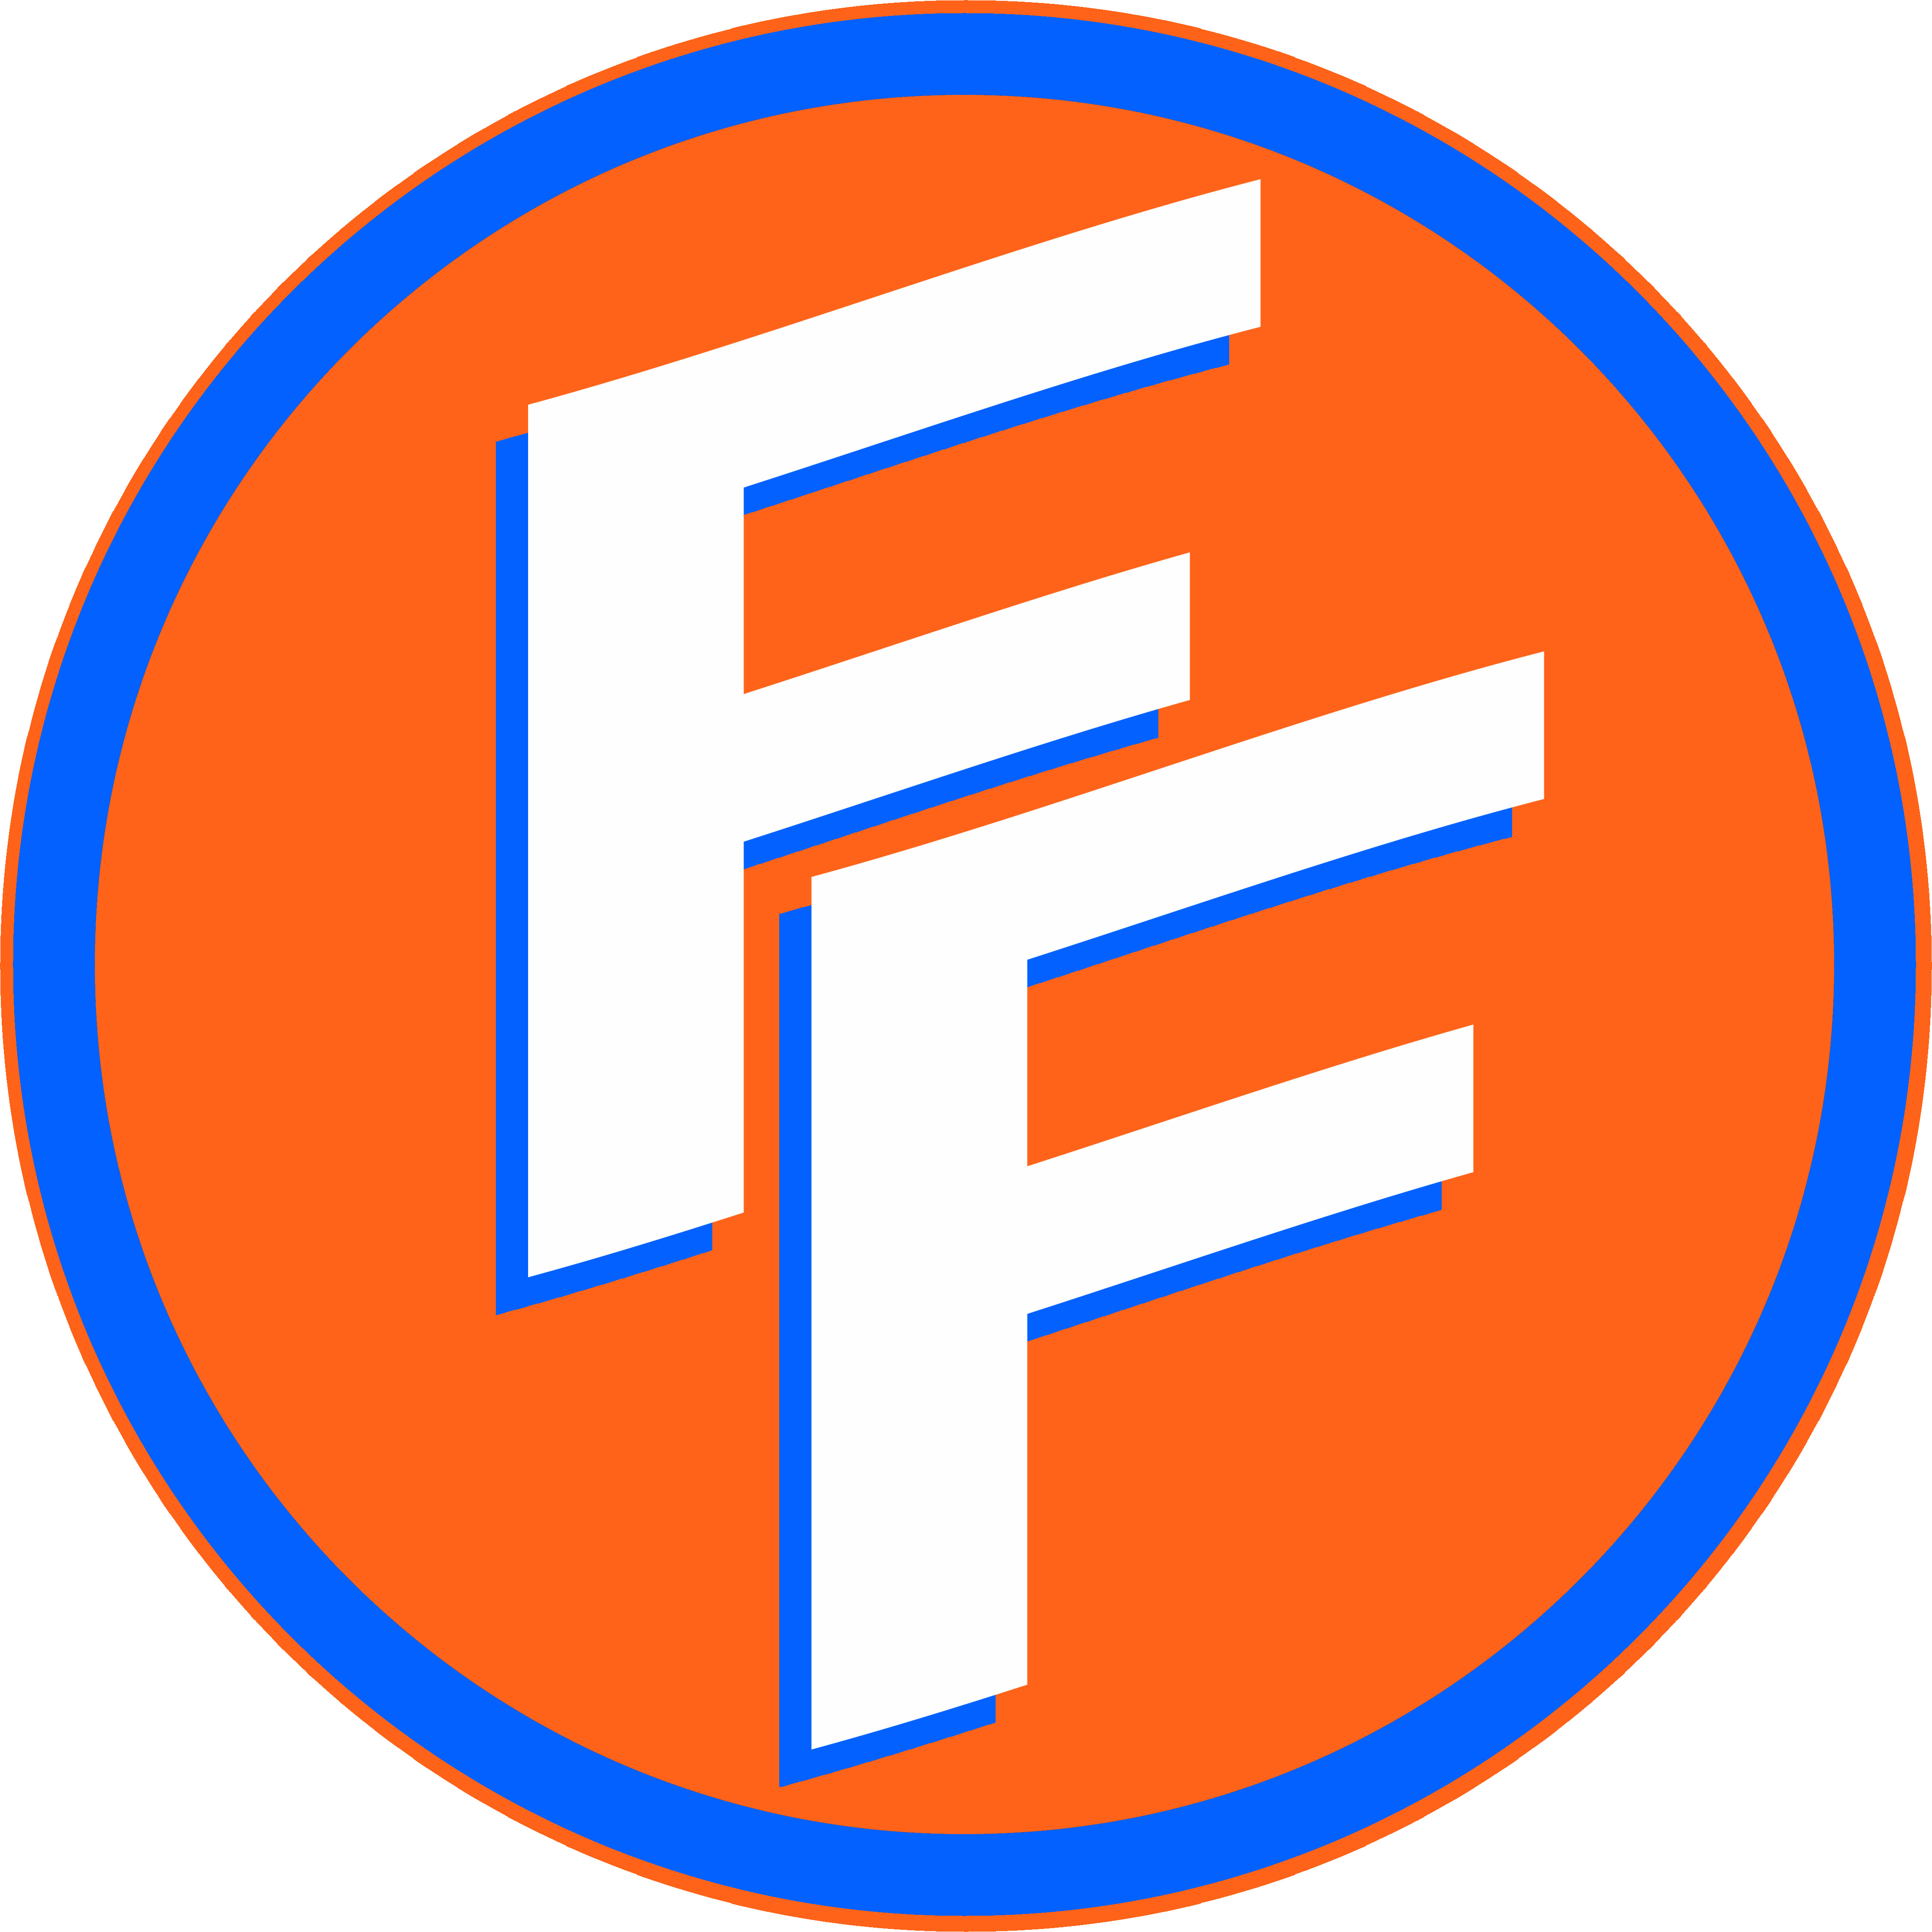 File:FF logo pompoenorange cyaanblauw.jpg